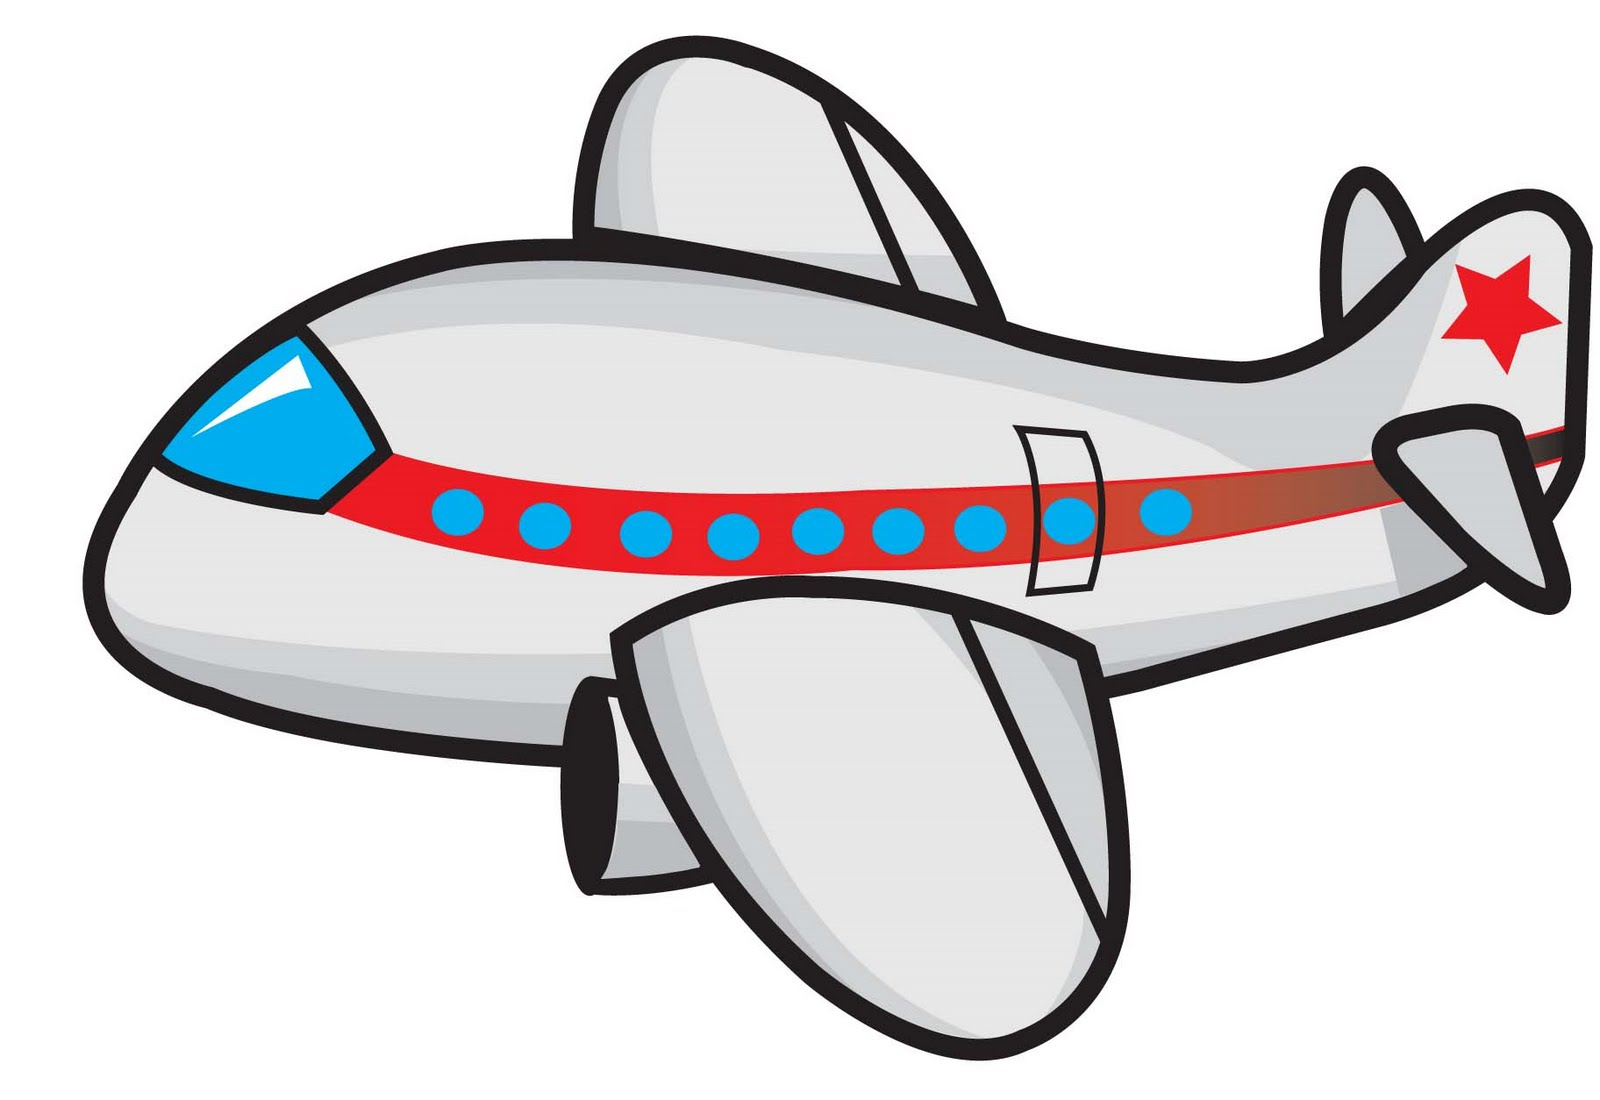 Cartoon airplane image.